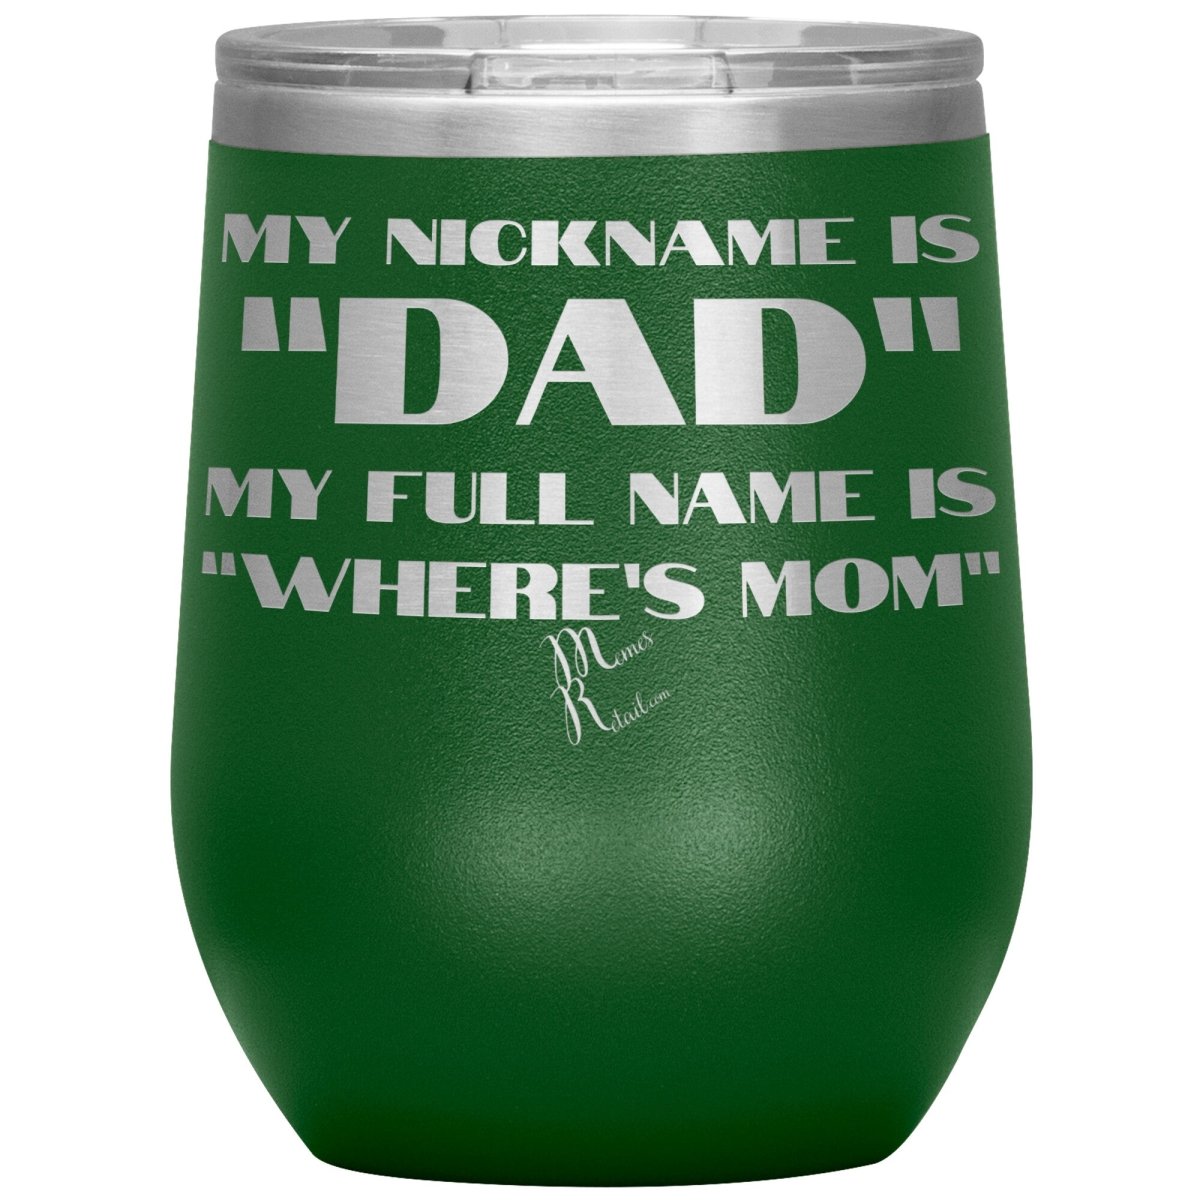 My Nickname is "Dad", My Full Name is "Where's Mom" Tumblers, 12oz Wine Insulated Tumbler / Green - MemesRetail.com